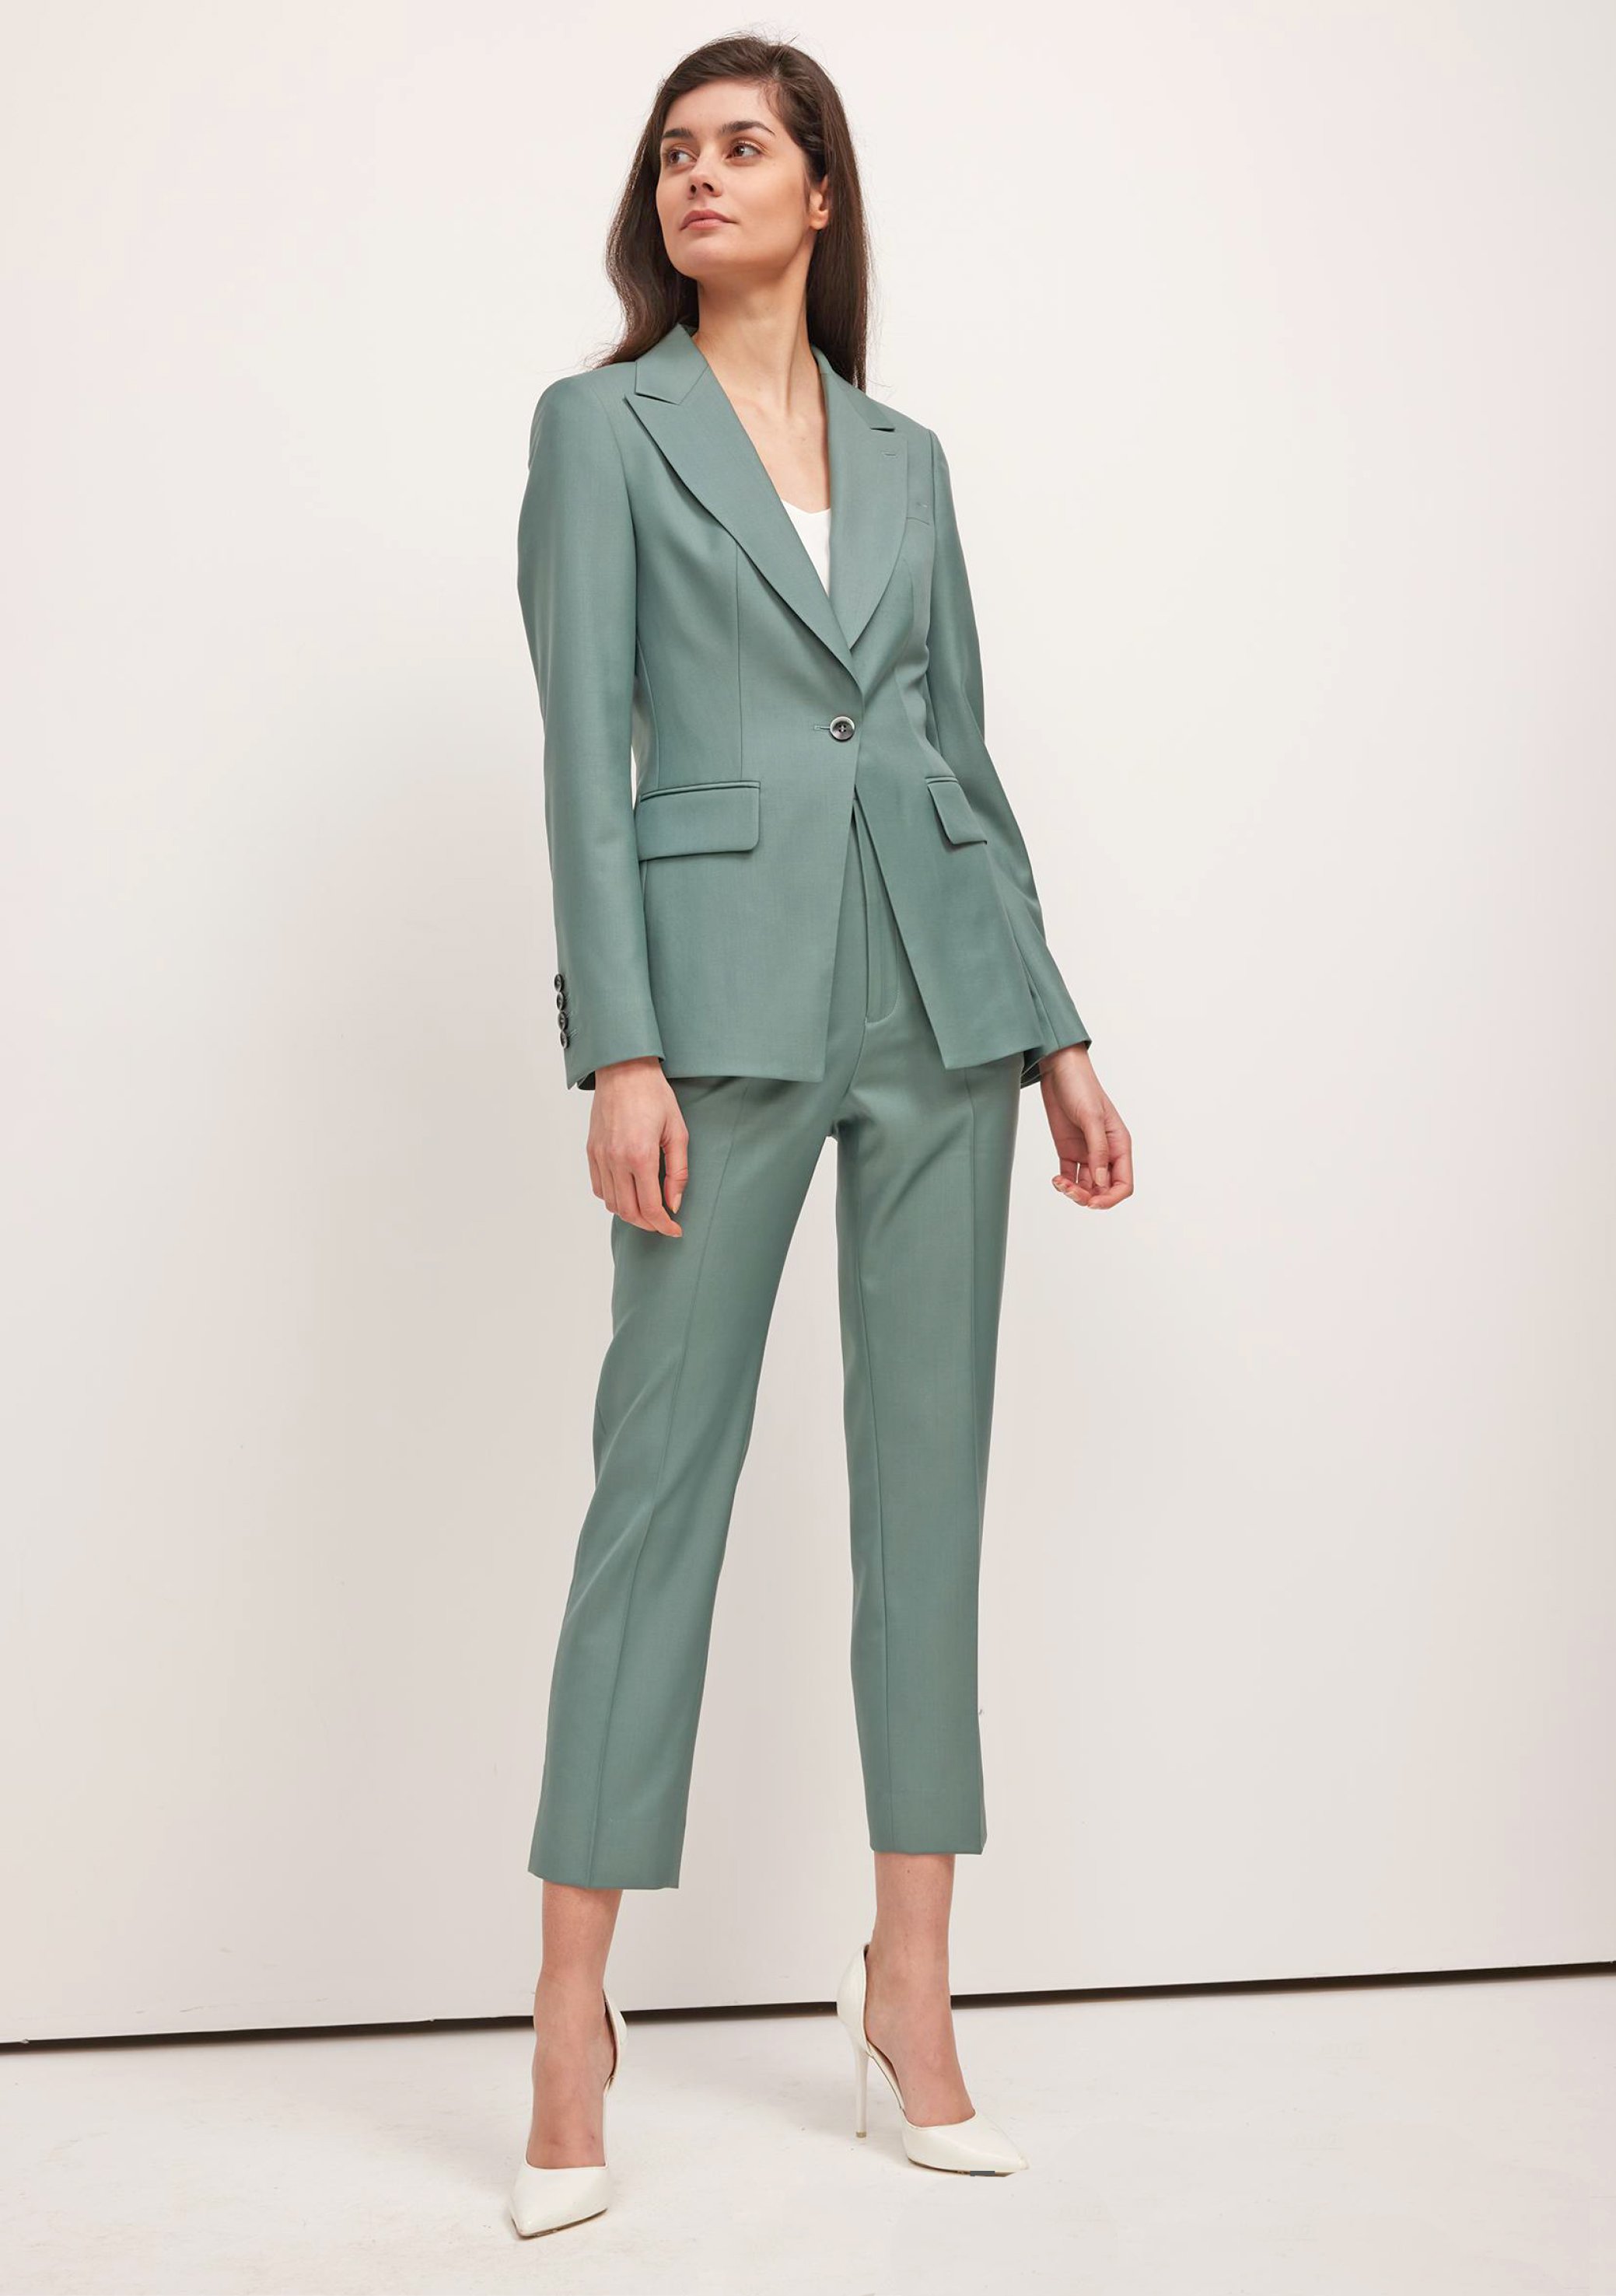 Ethnic Suits for Women | Suit Sets for Women - Westside – Page 2-nextbuild.com.vn